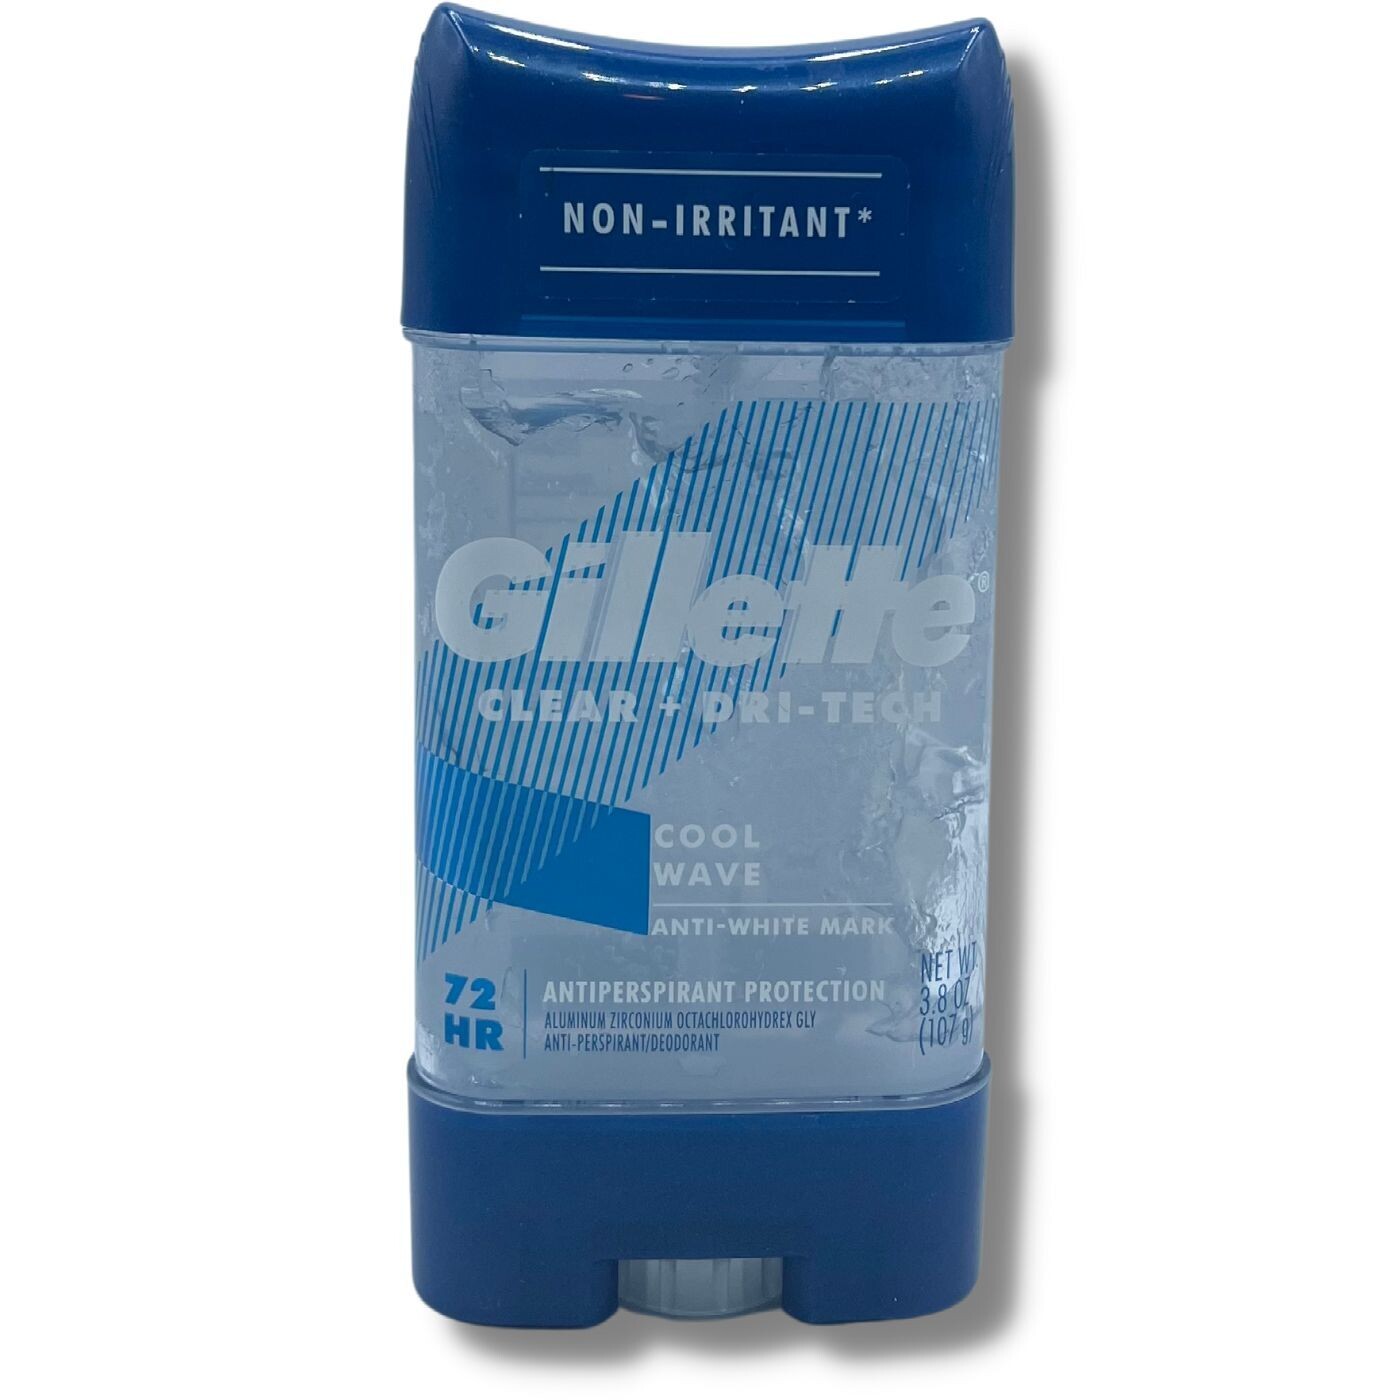 Gillette Antiperspirant Deodorant